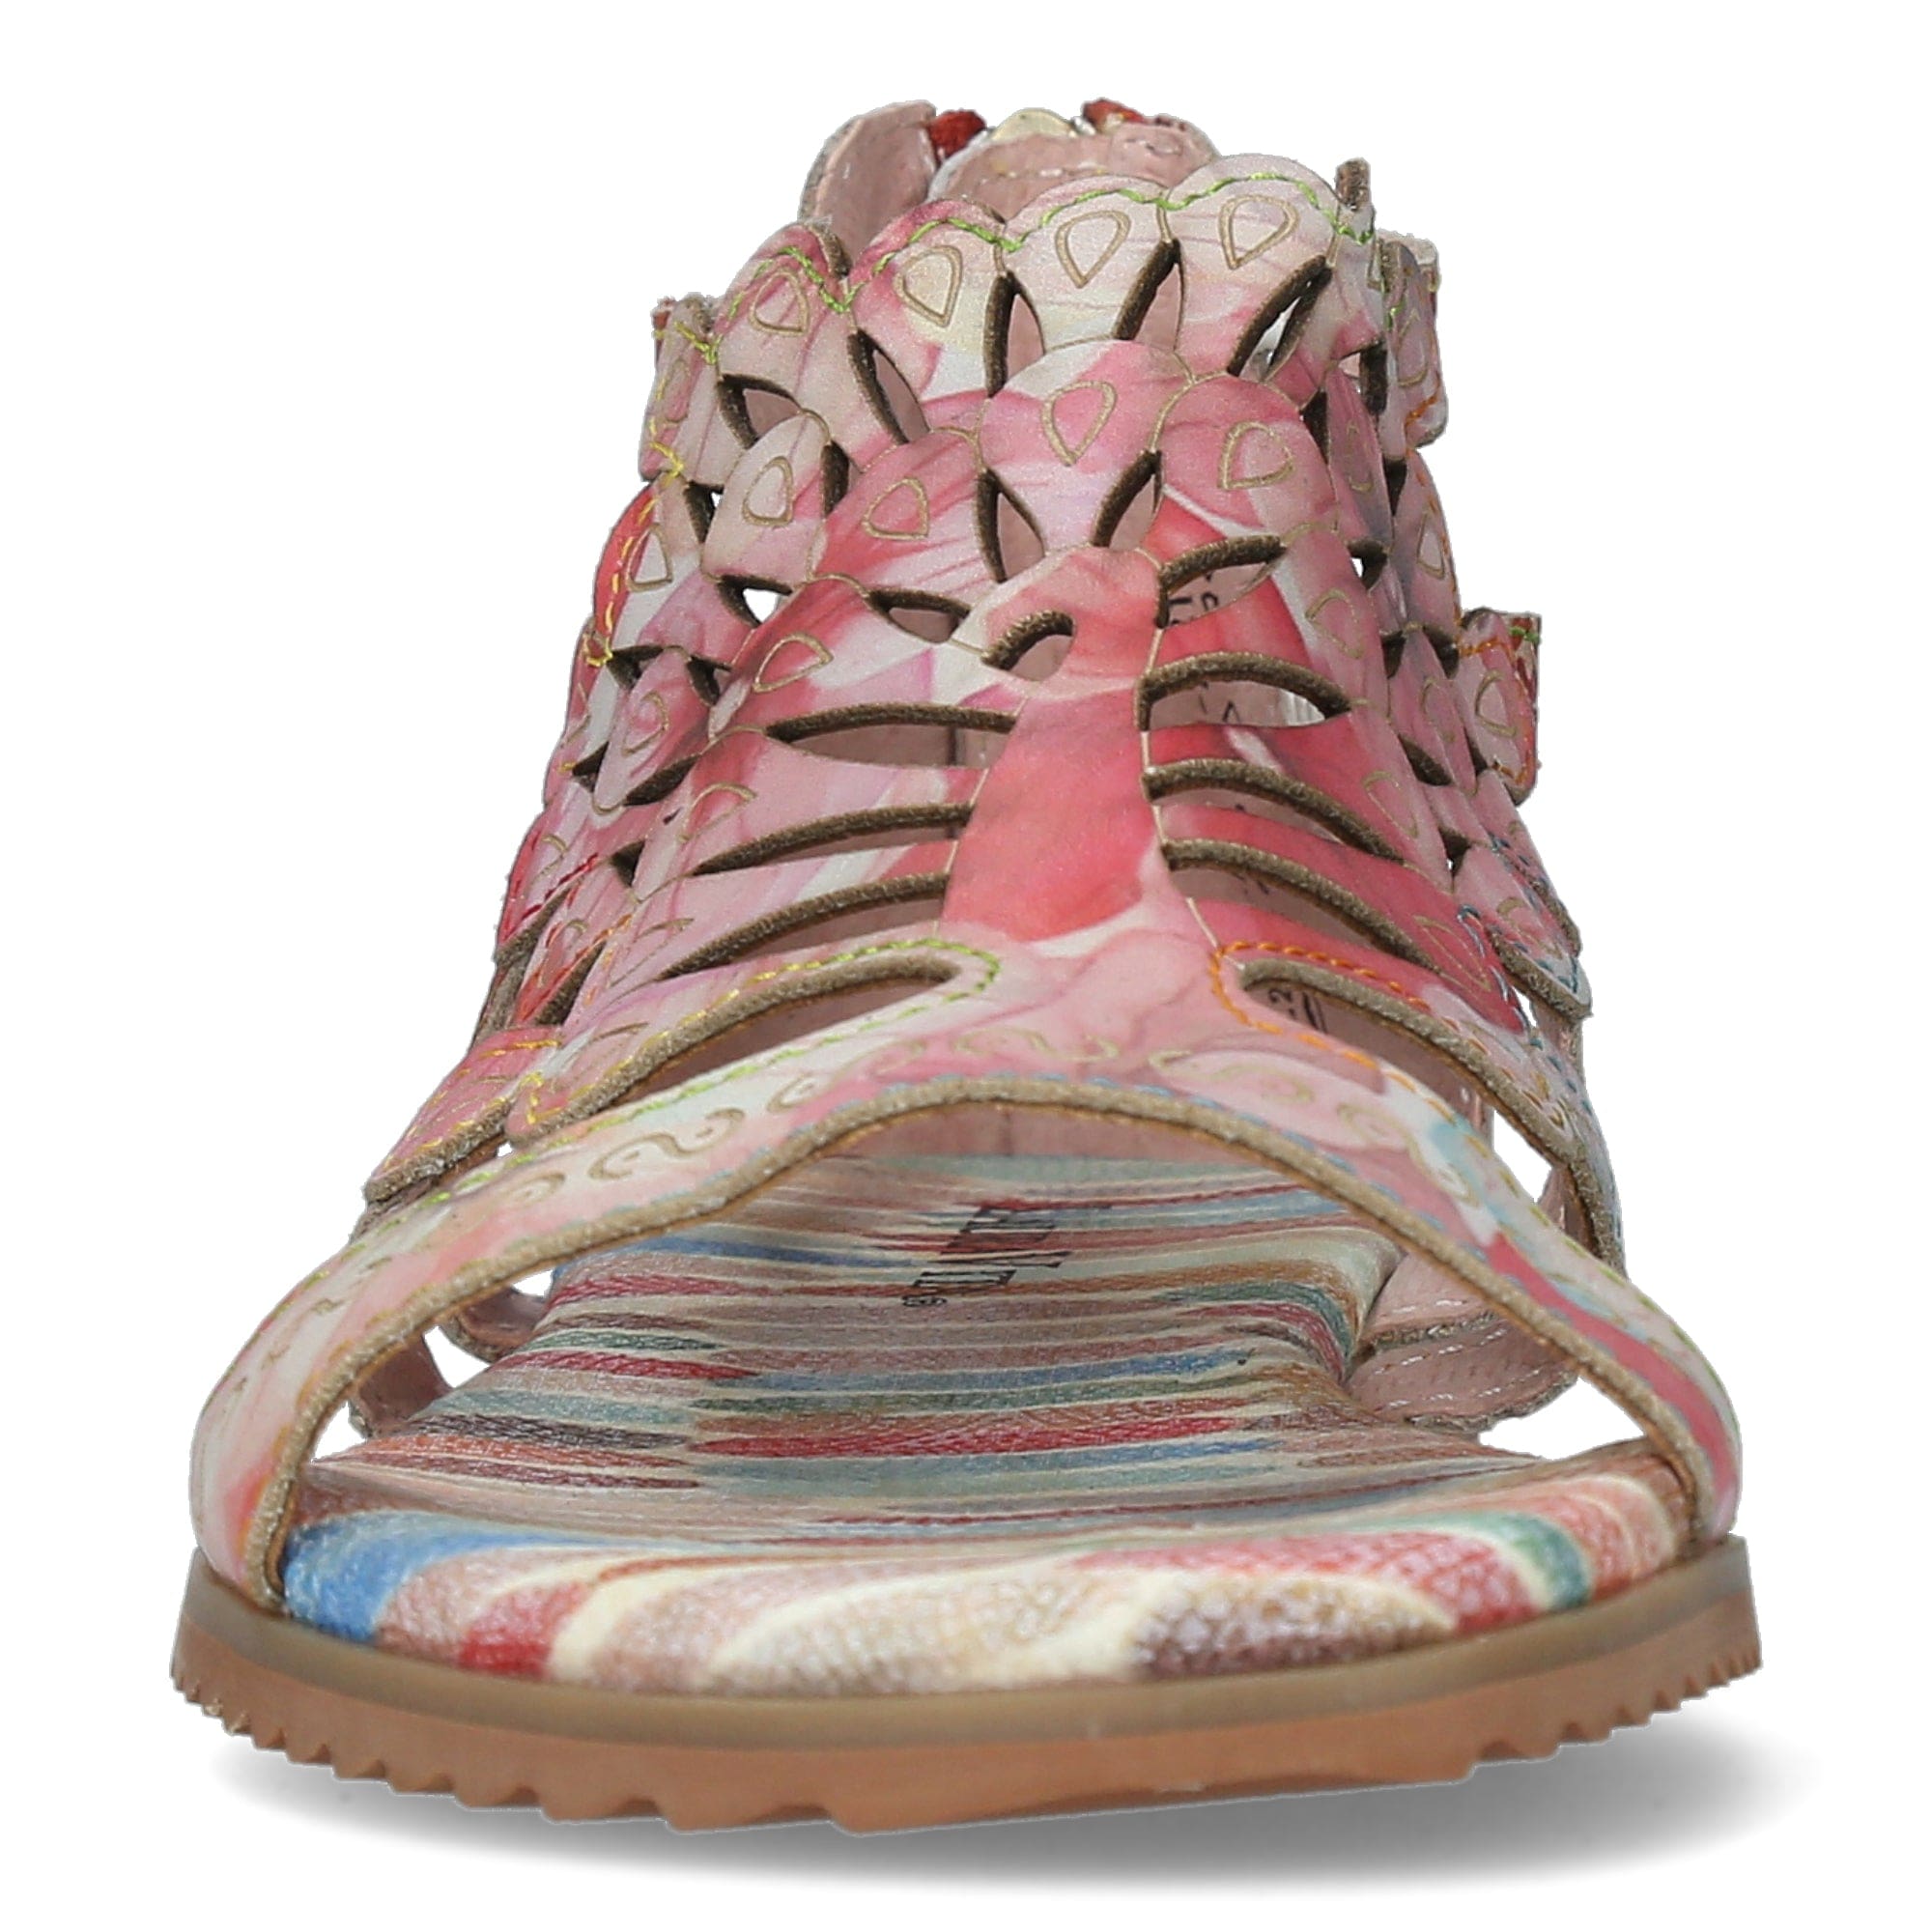 Chaussures FECLICIEO 0321 Fleur - Sandale